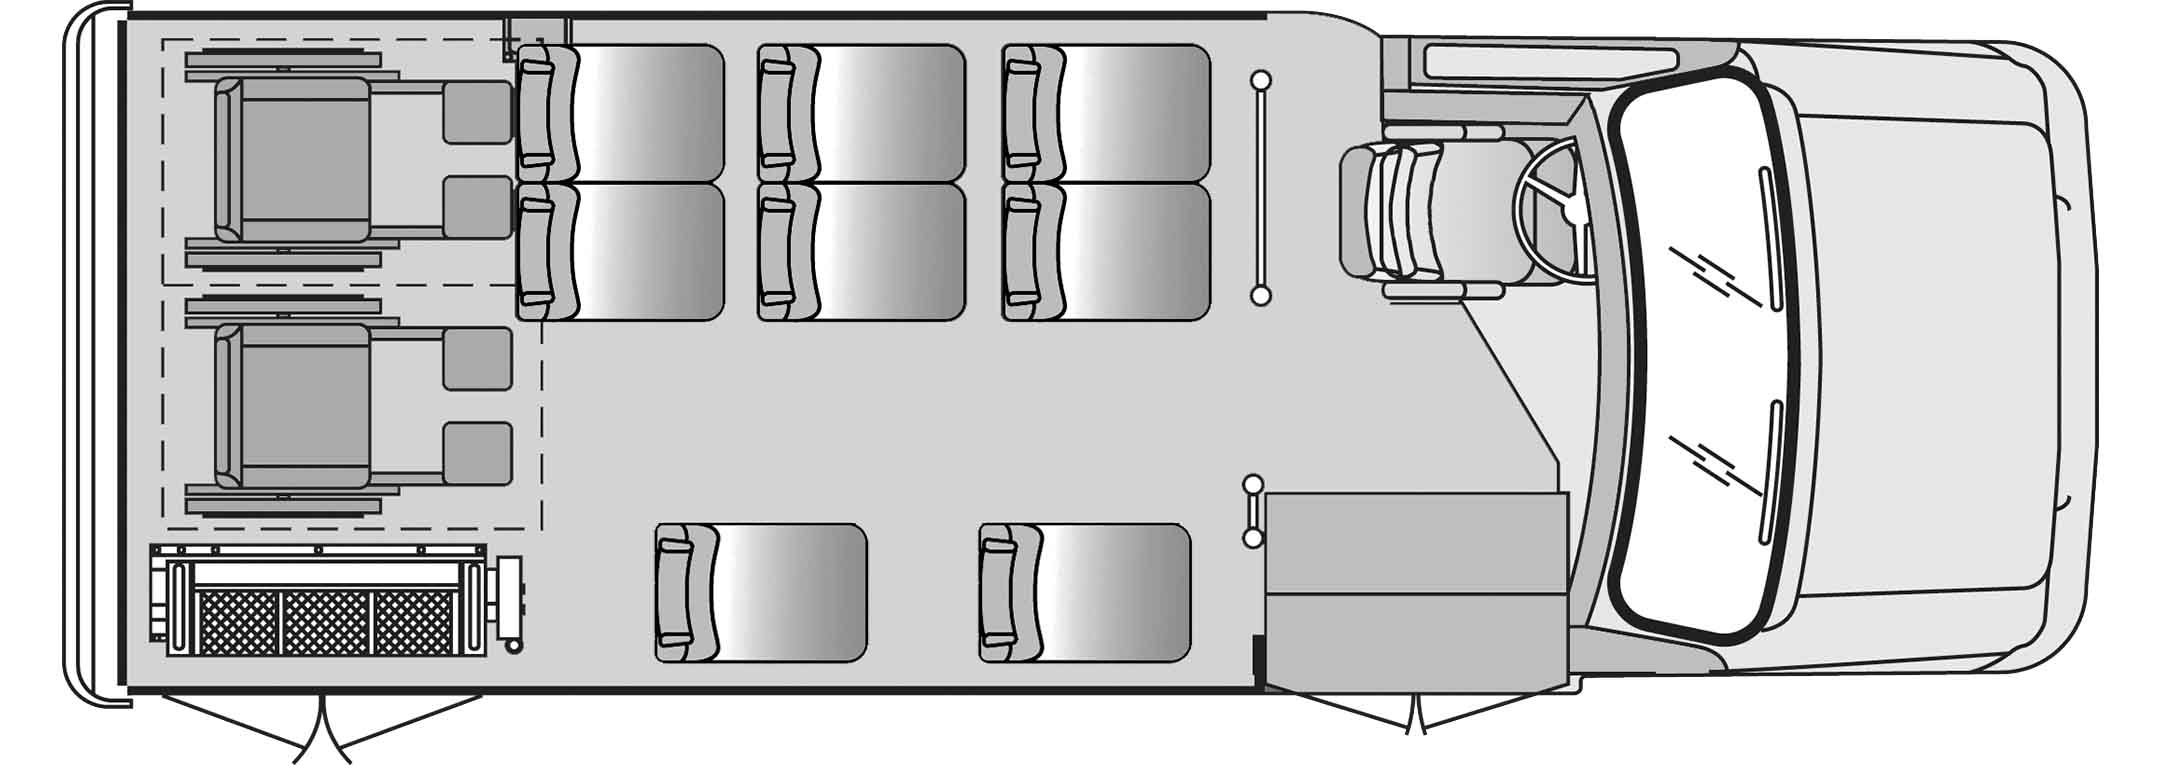 8 Passenger 2 Wheelchair Plus Driver Floorplan Image